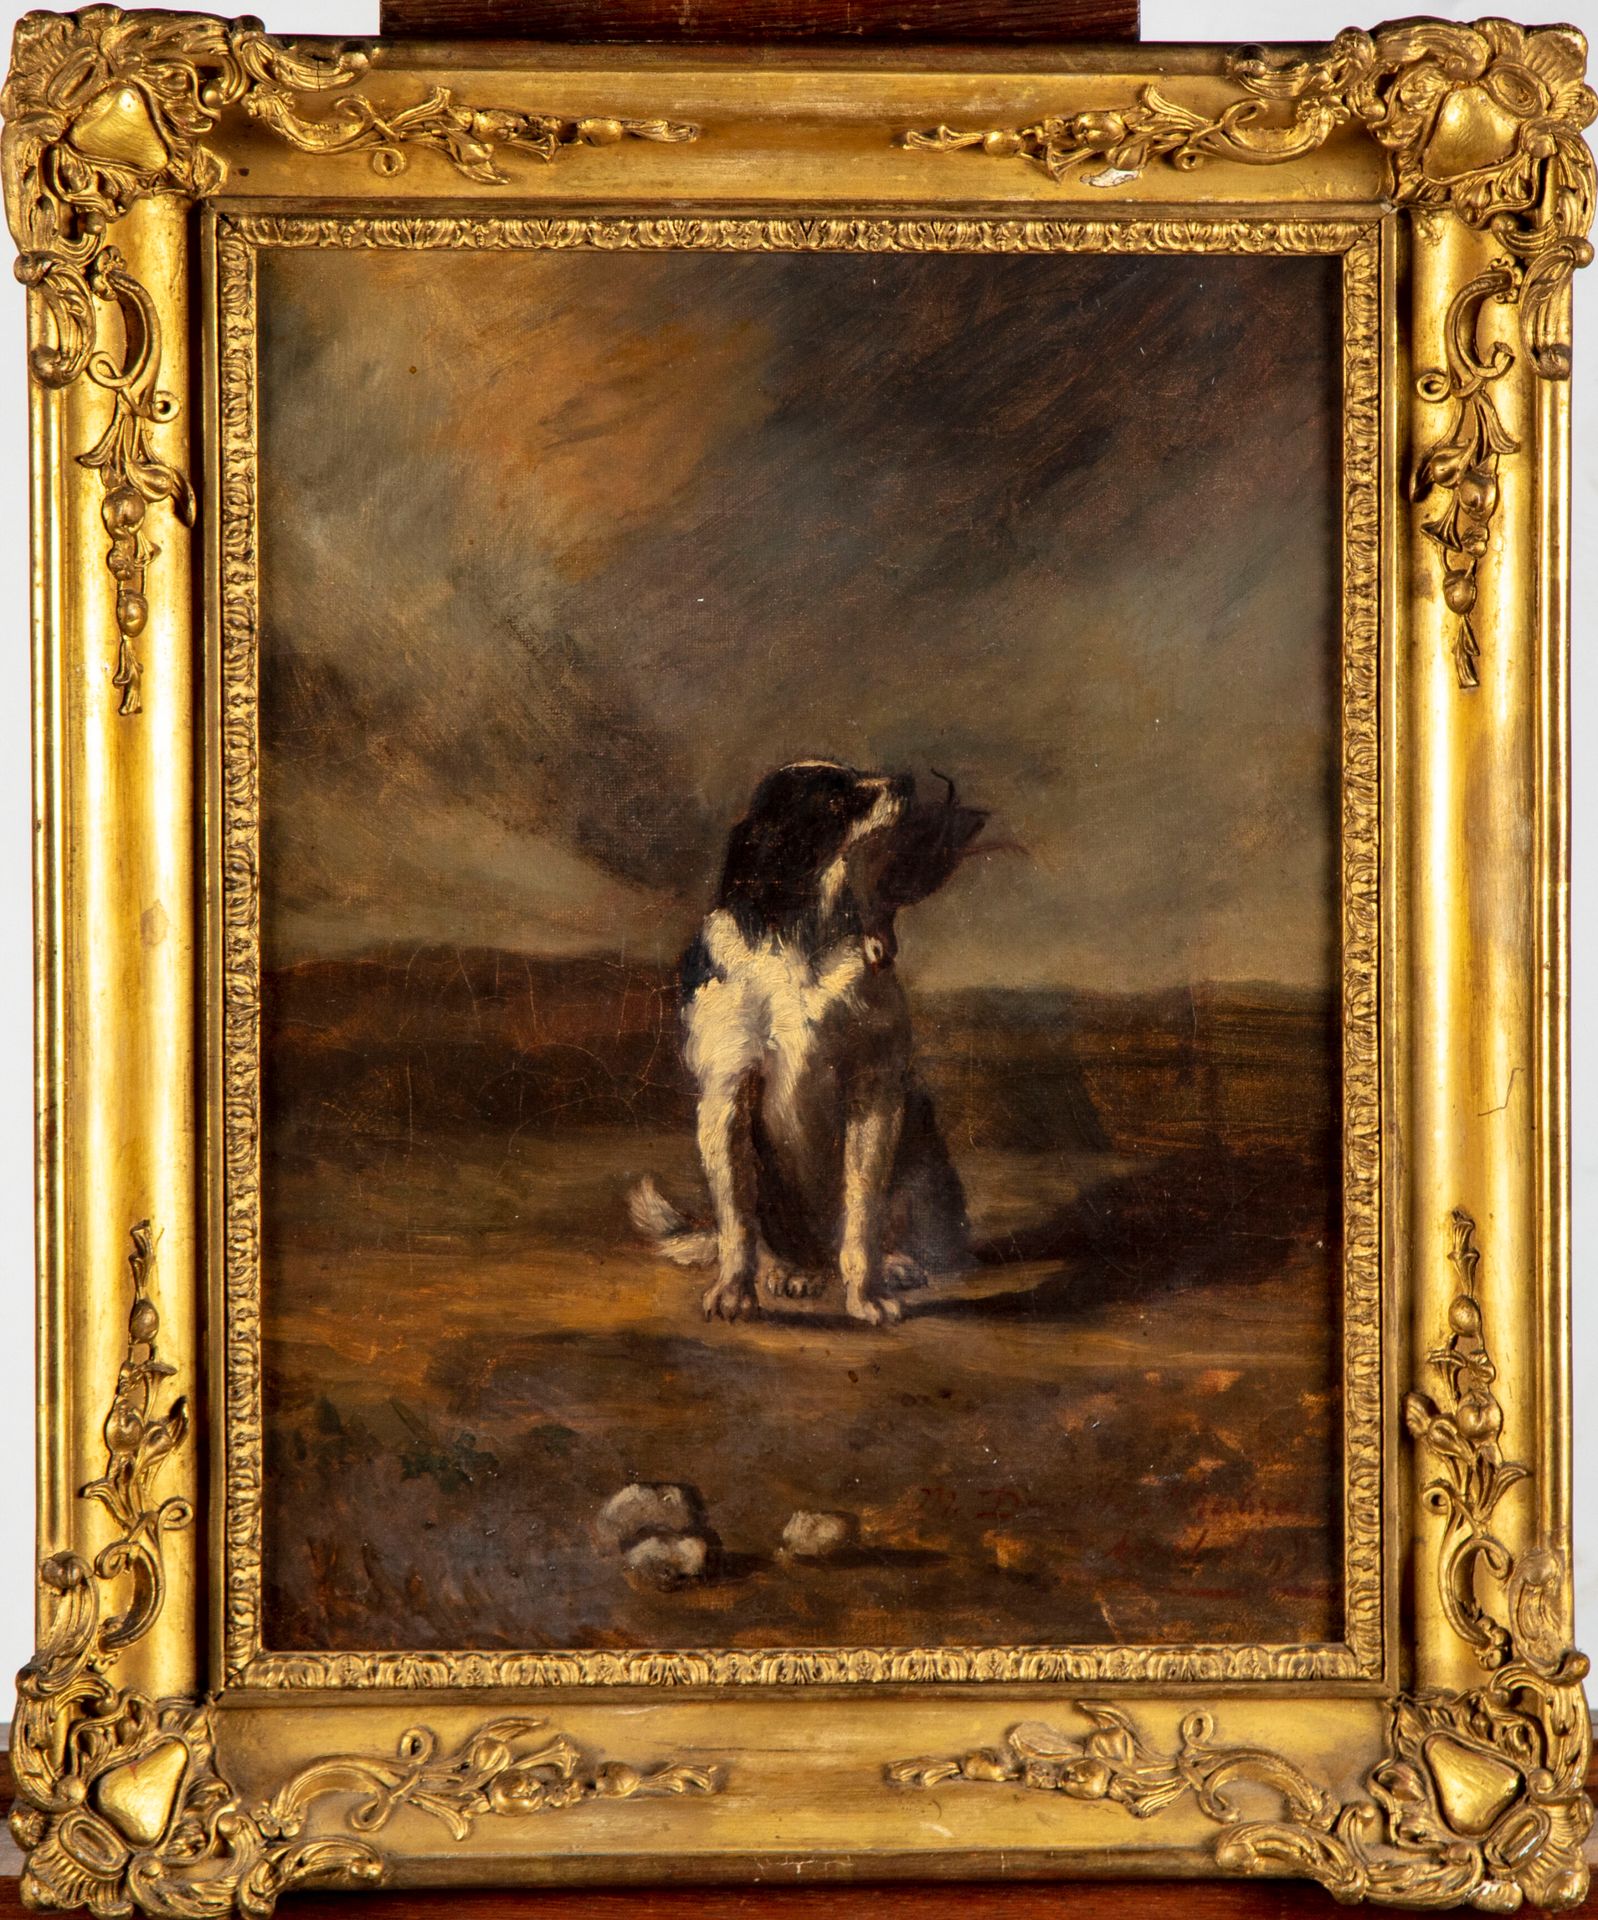 Null 19世纪的法国学校

猎狗抱着一只鸟

布面油画

右下角有 "M. DEVILLE "的签名和1839年的日期

35 x 27 cm

(修复)